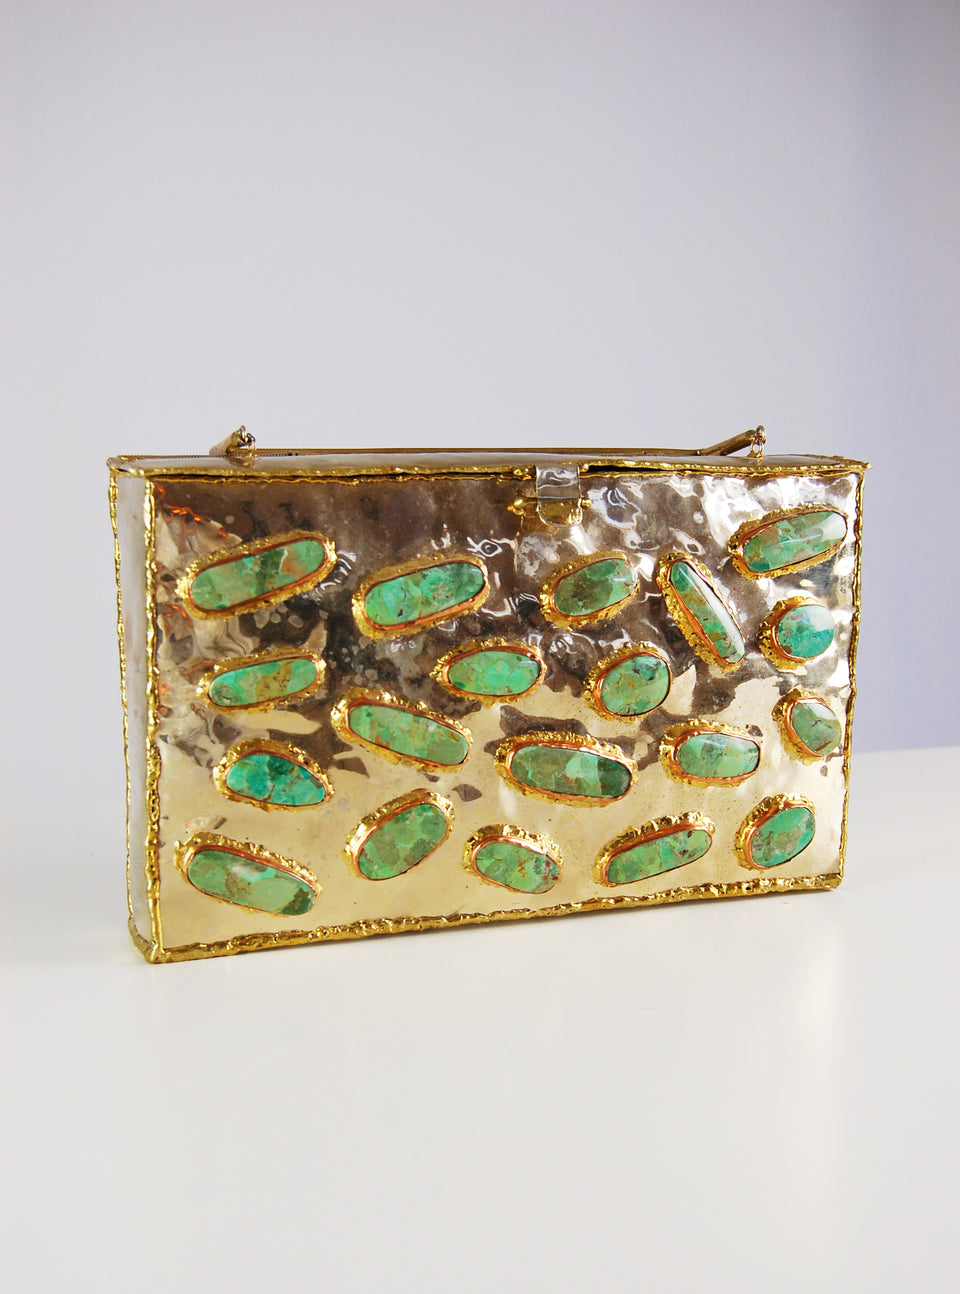 RARE: Handmade Mexican gold box bag